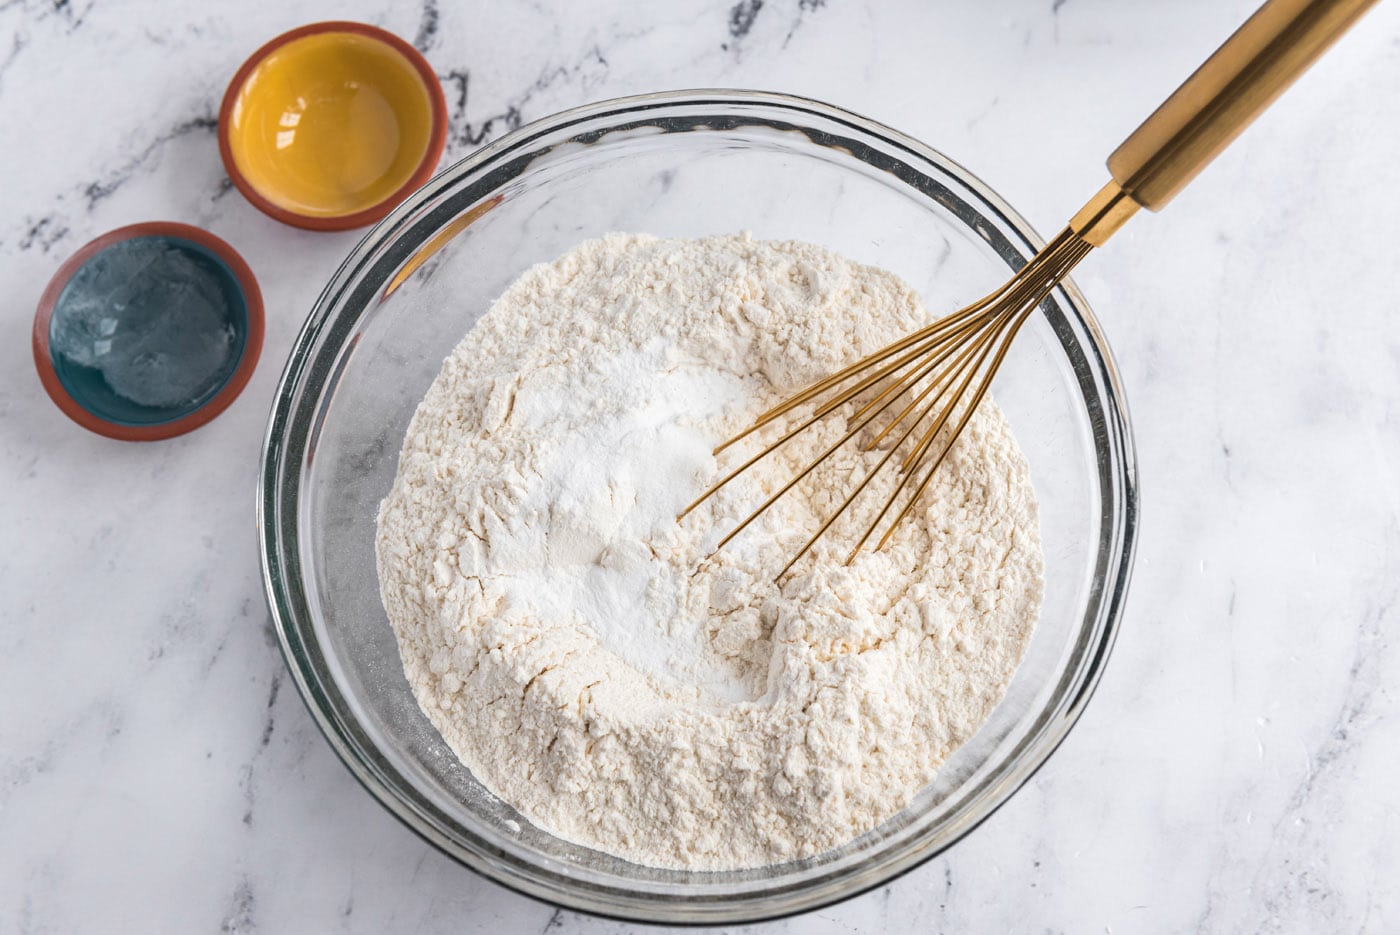 whisking flour, baking powder, and salt in a bowl